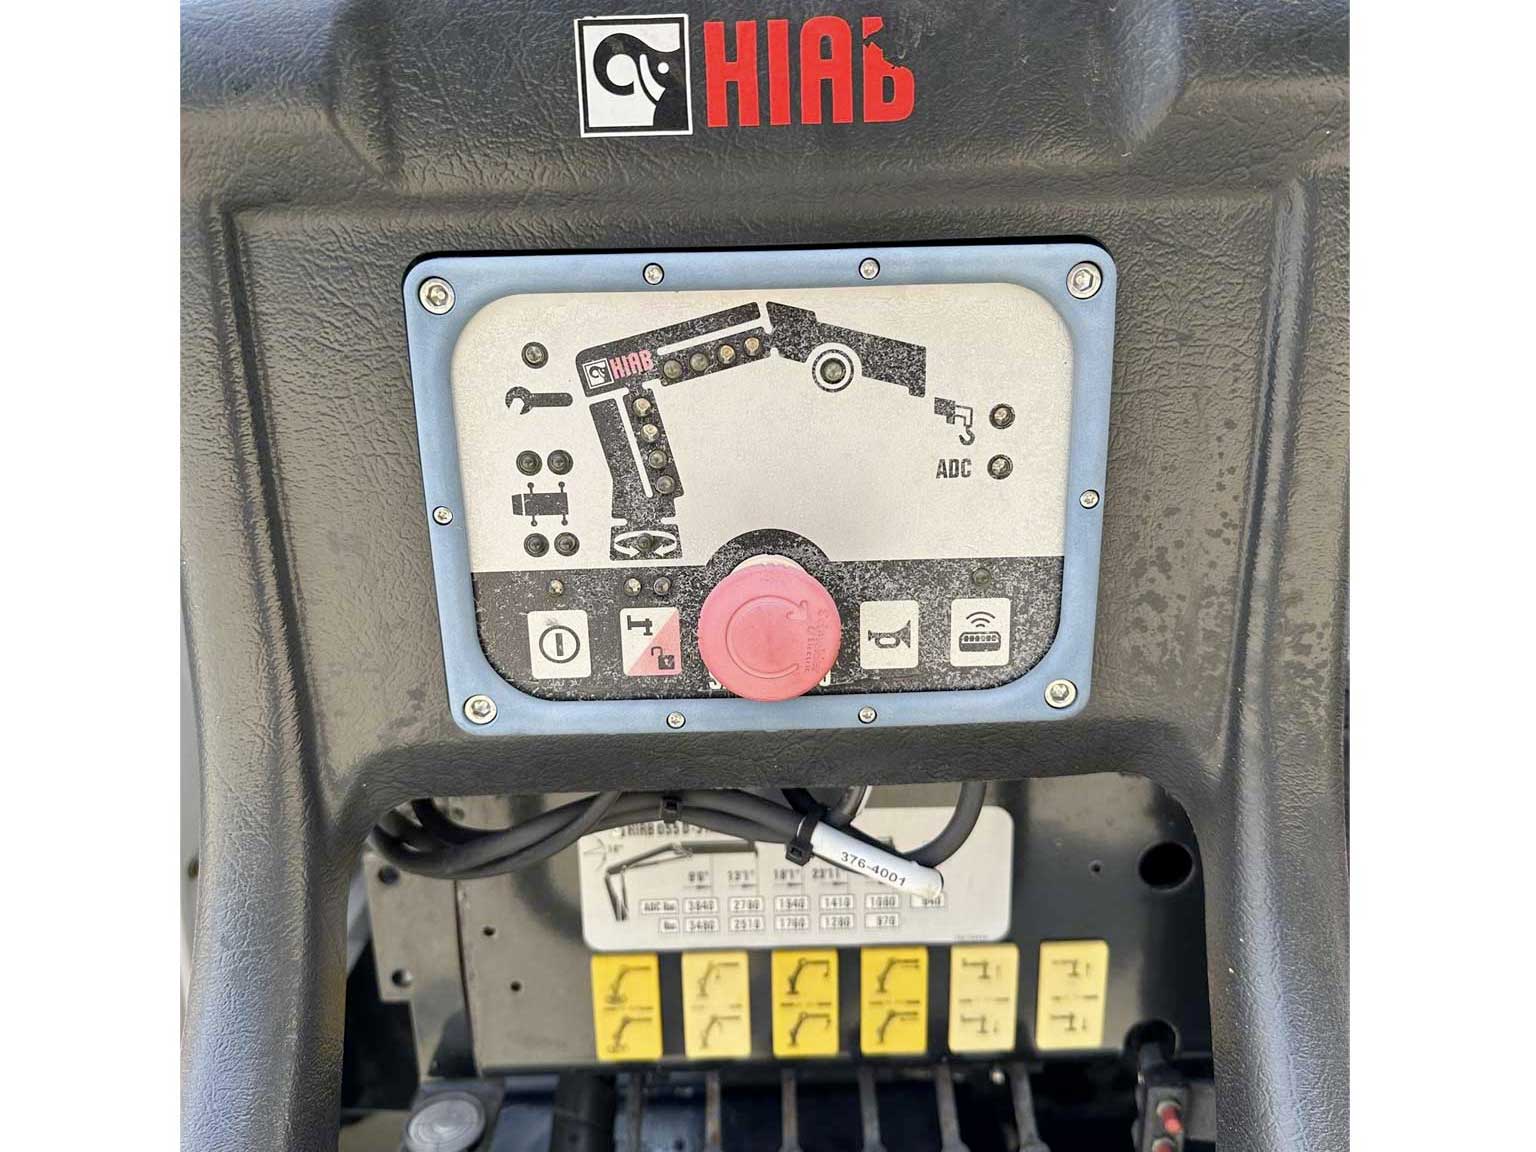 A utility truck crane control panel